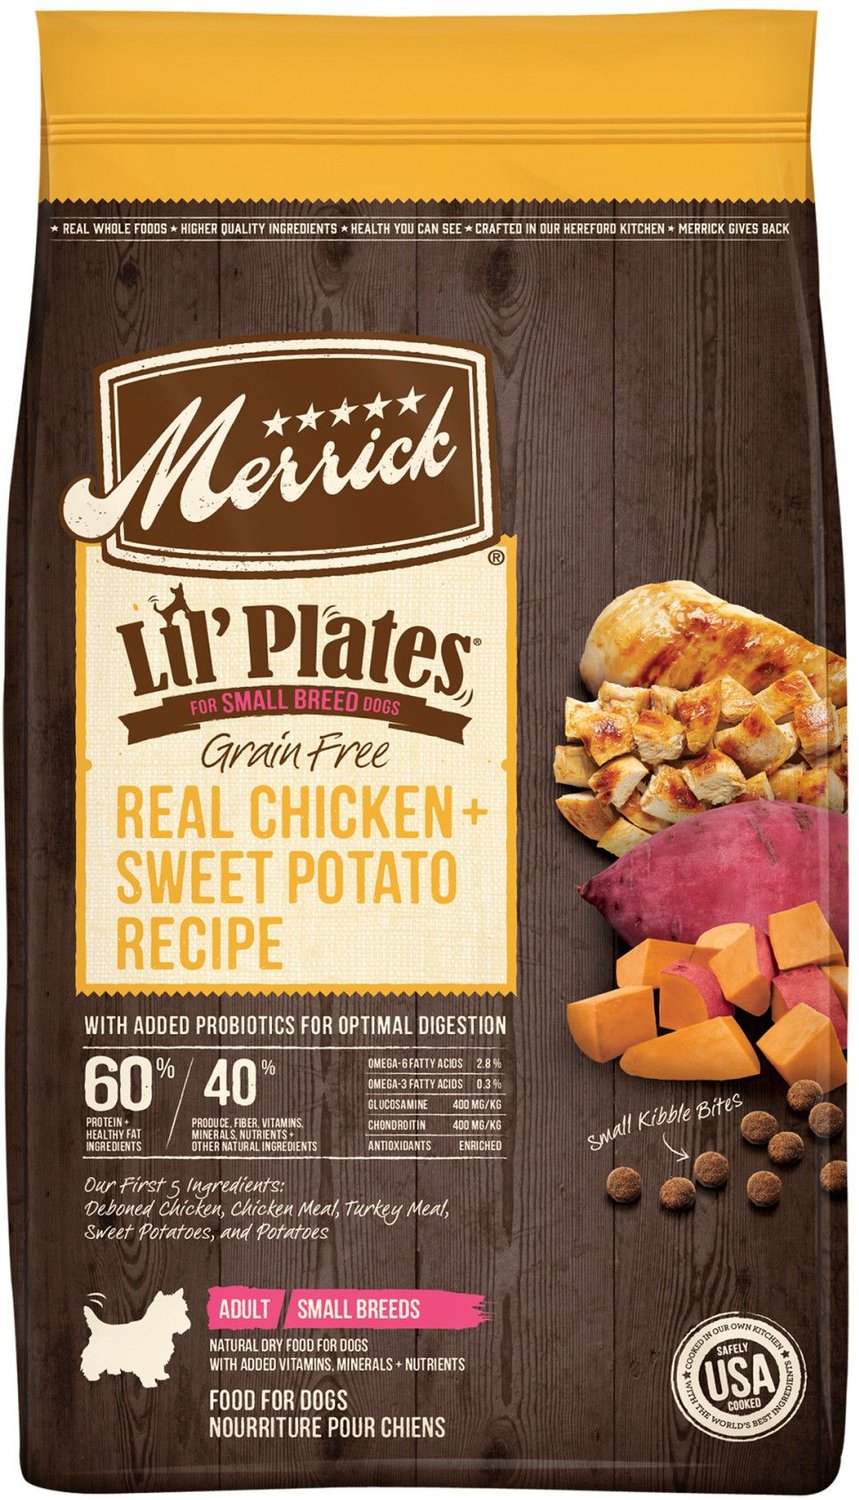 Merrick Lil' Plates Grain-Free Real Chicken & Sweet Potato